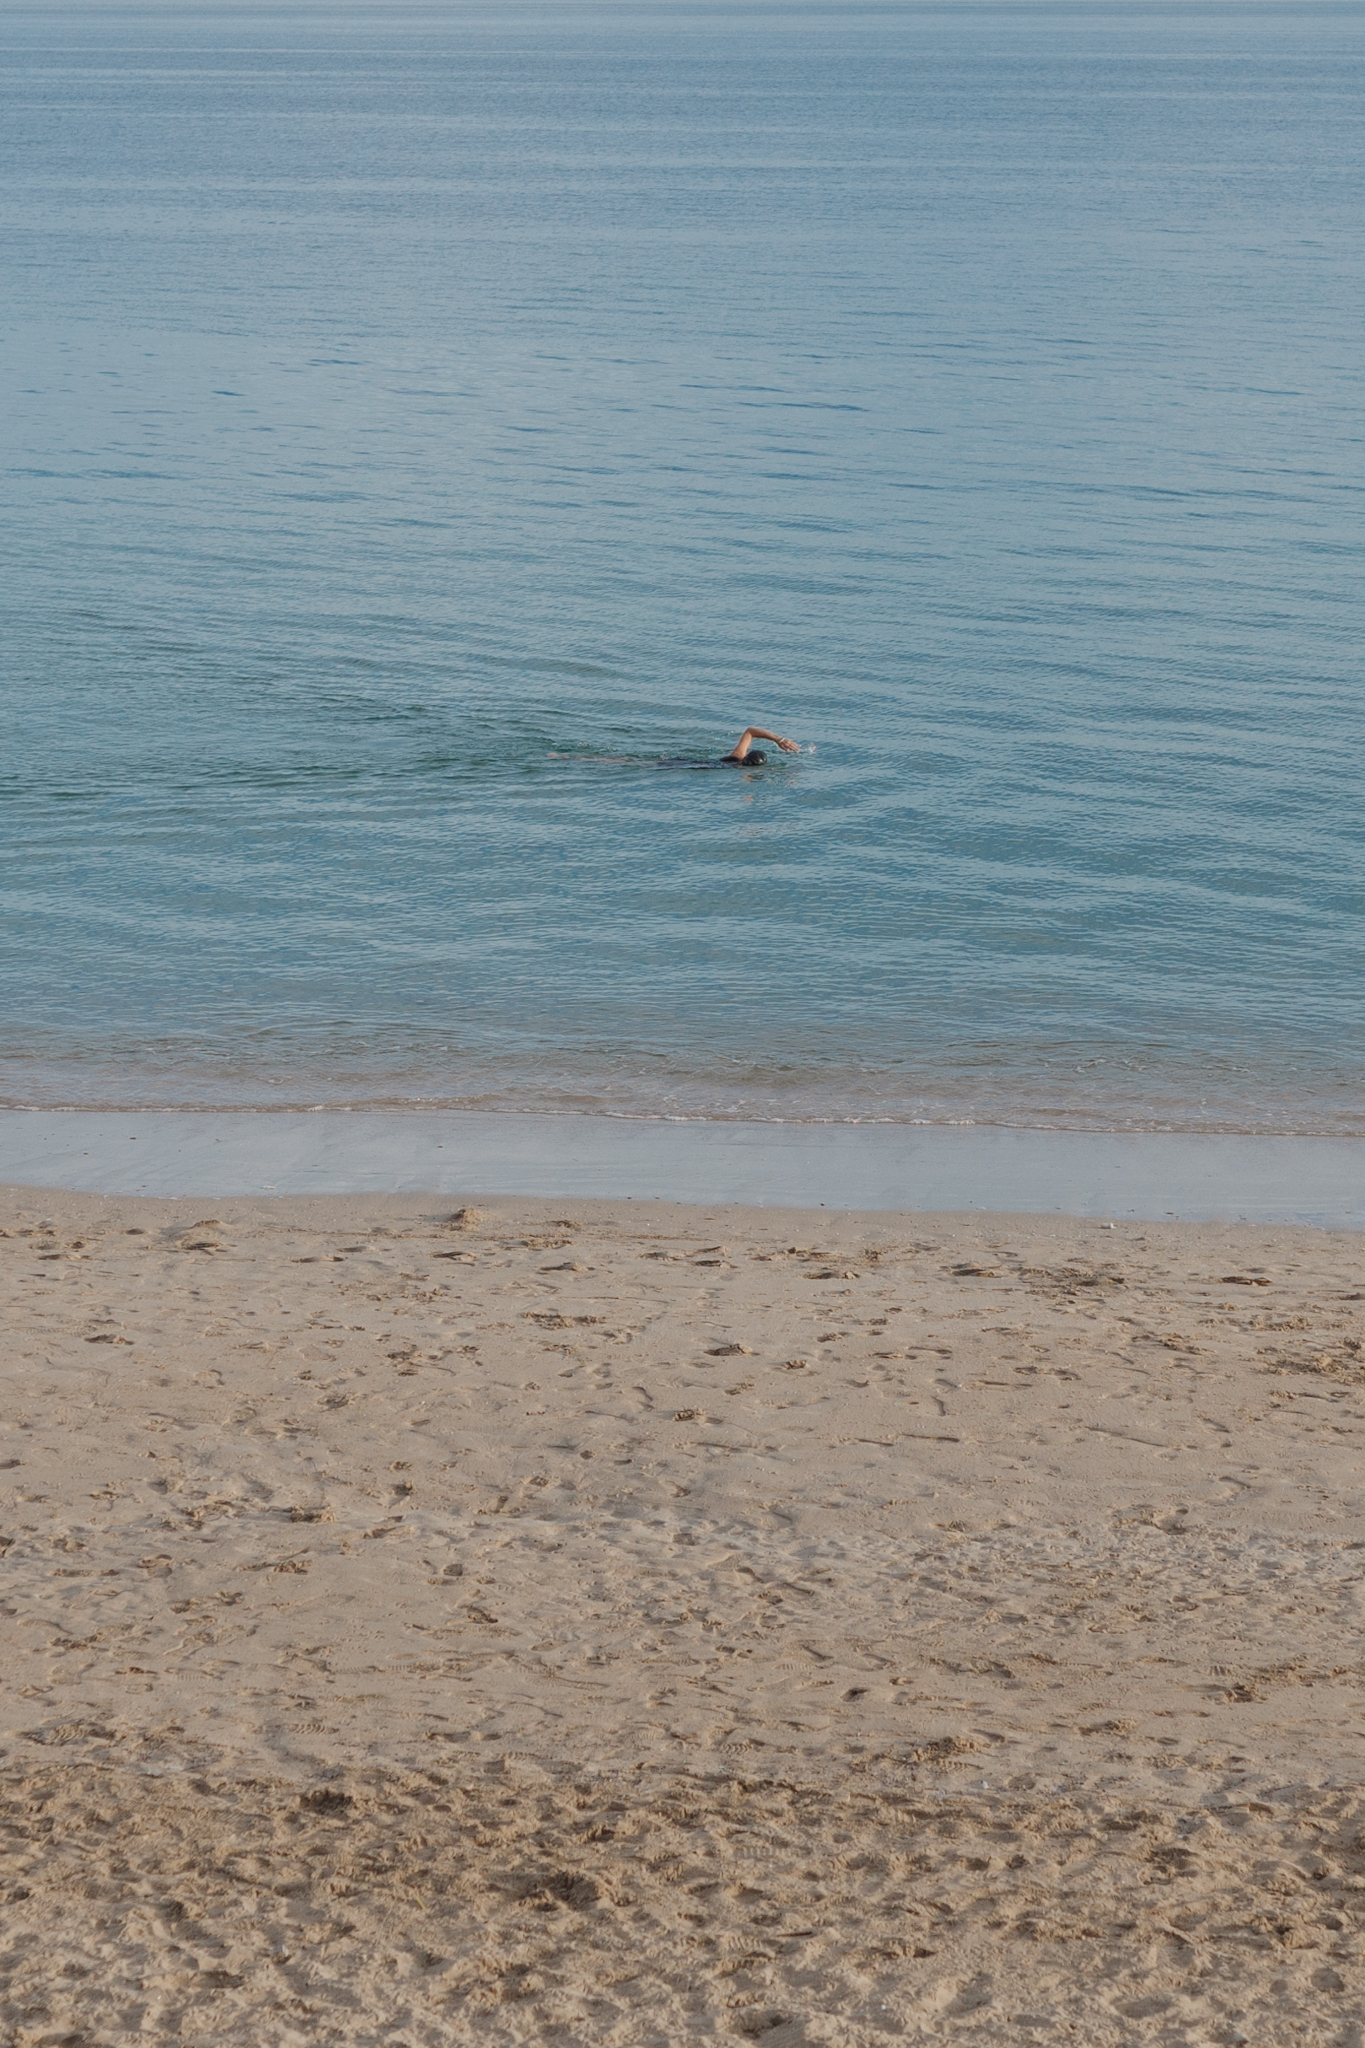 A person swimming in the sea near a sandy beach.